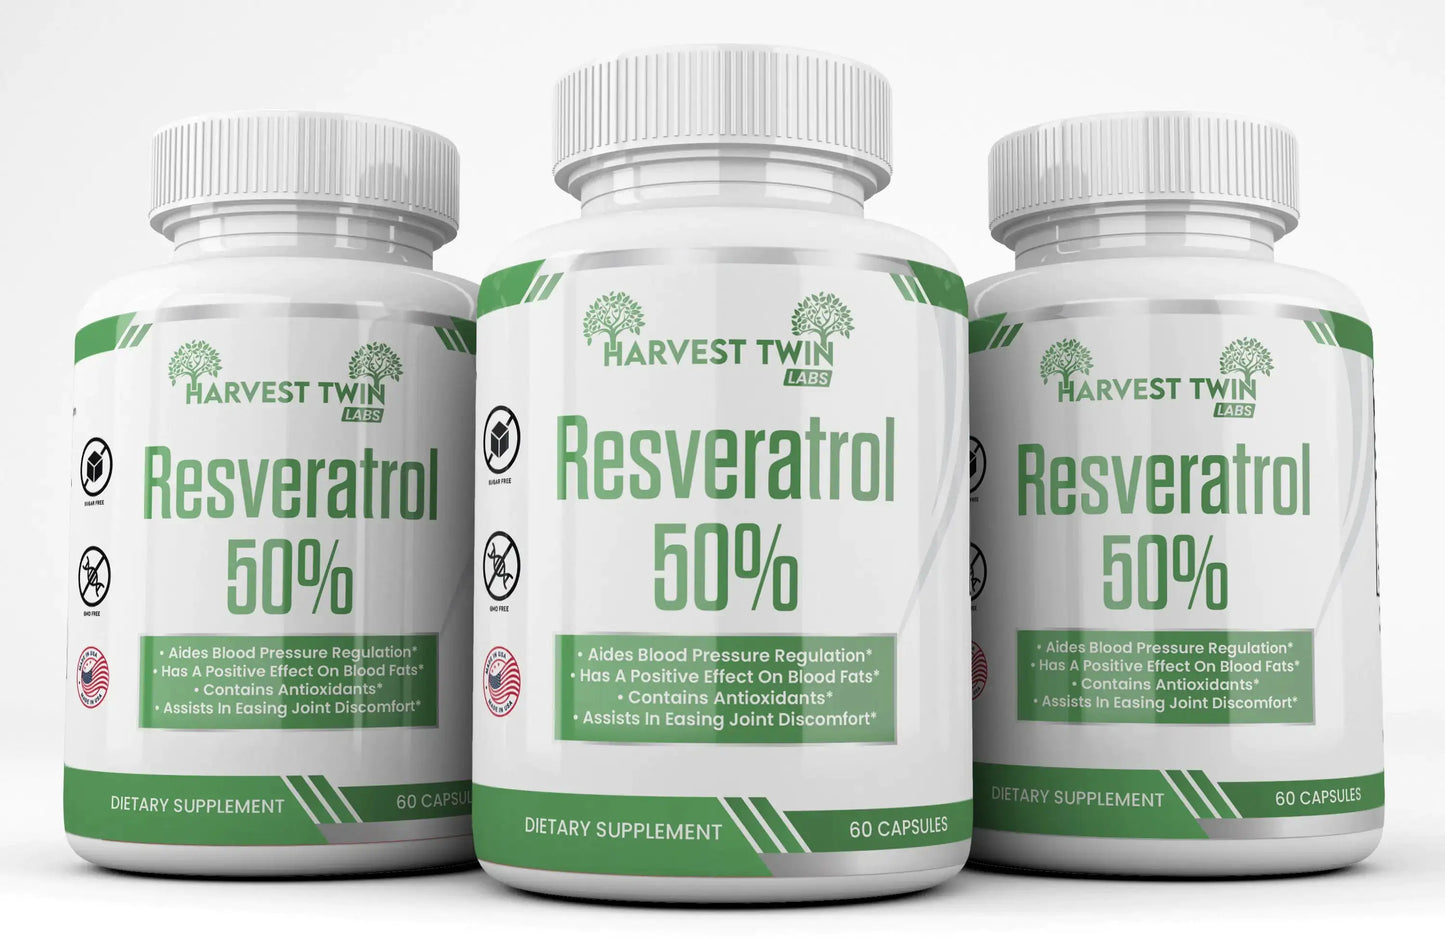 Resveratrol 50%